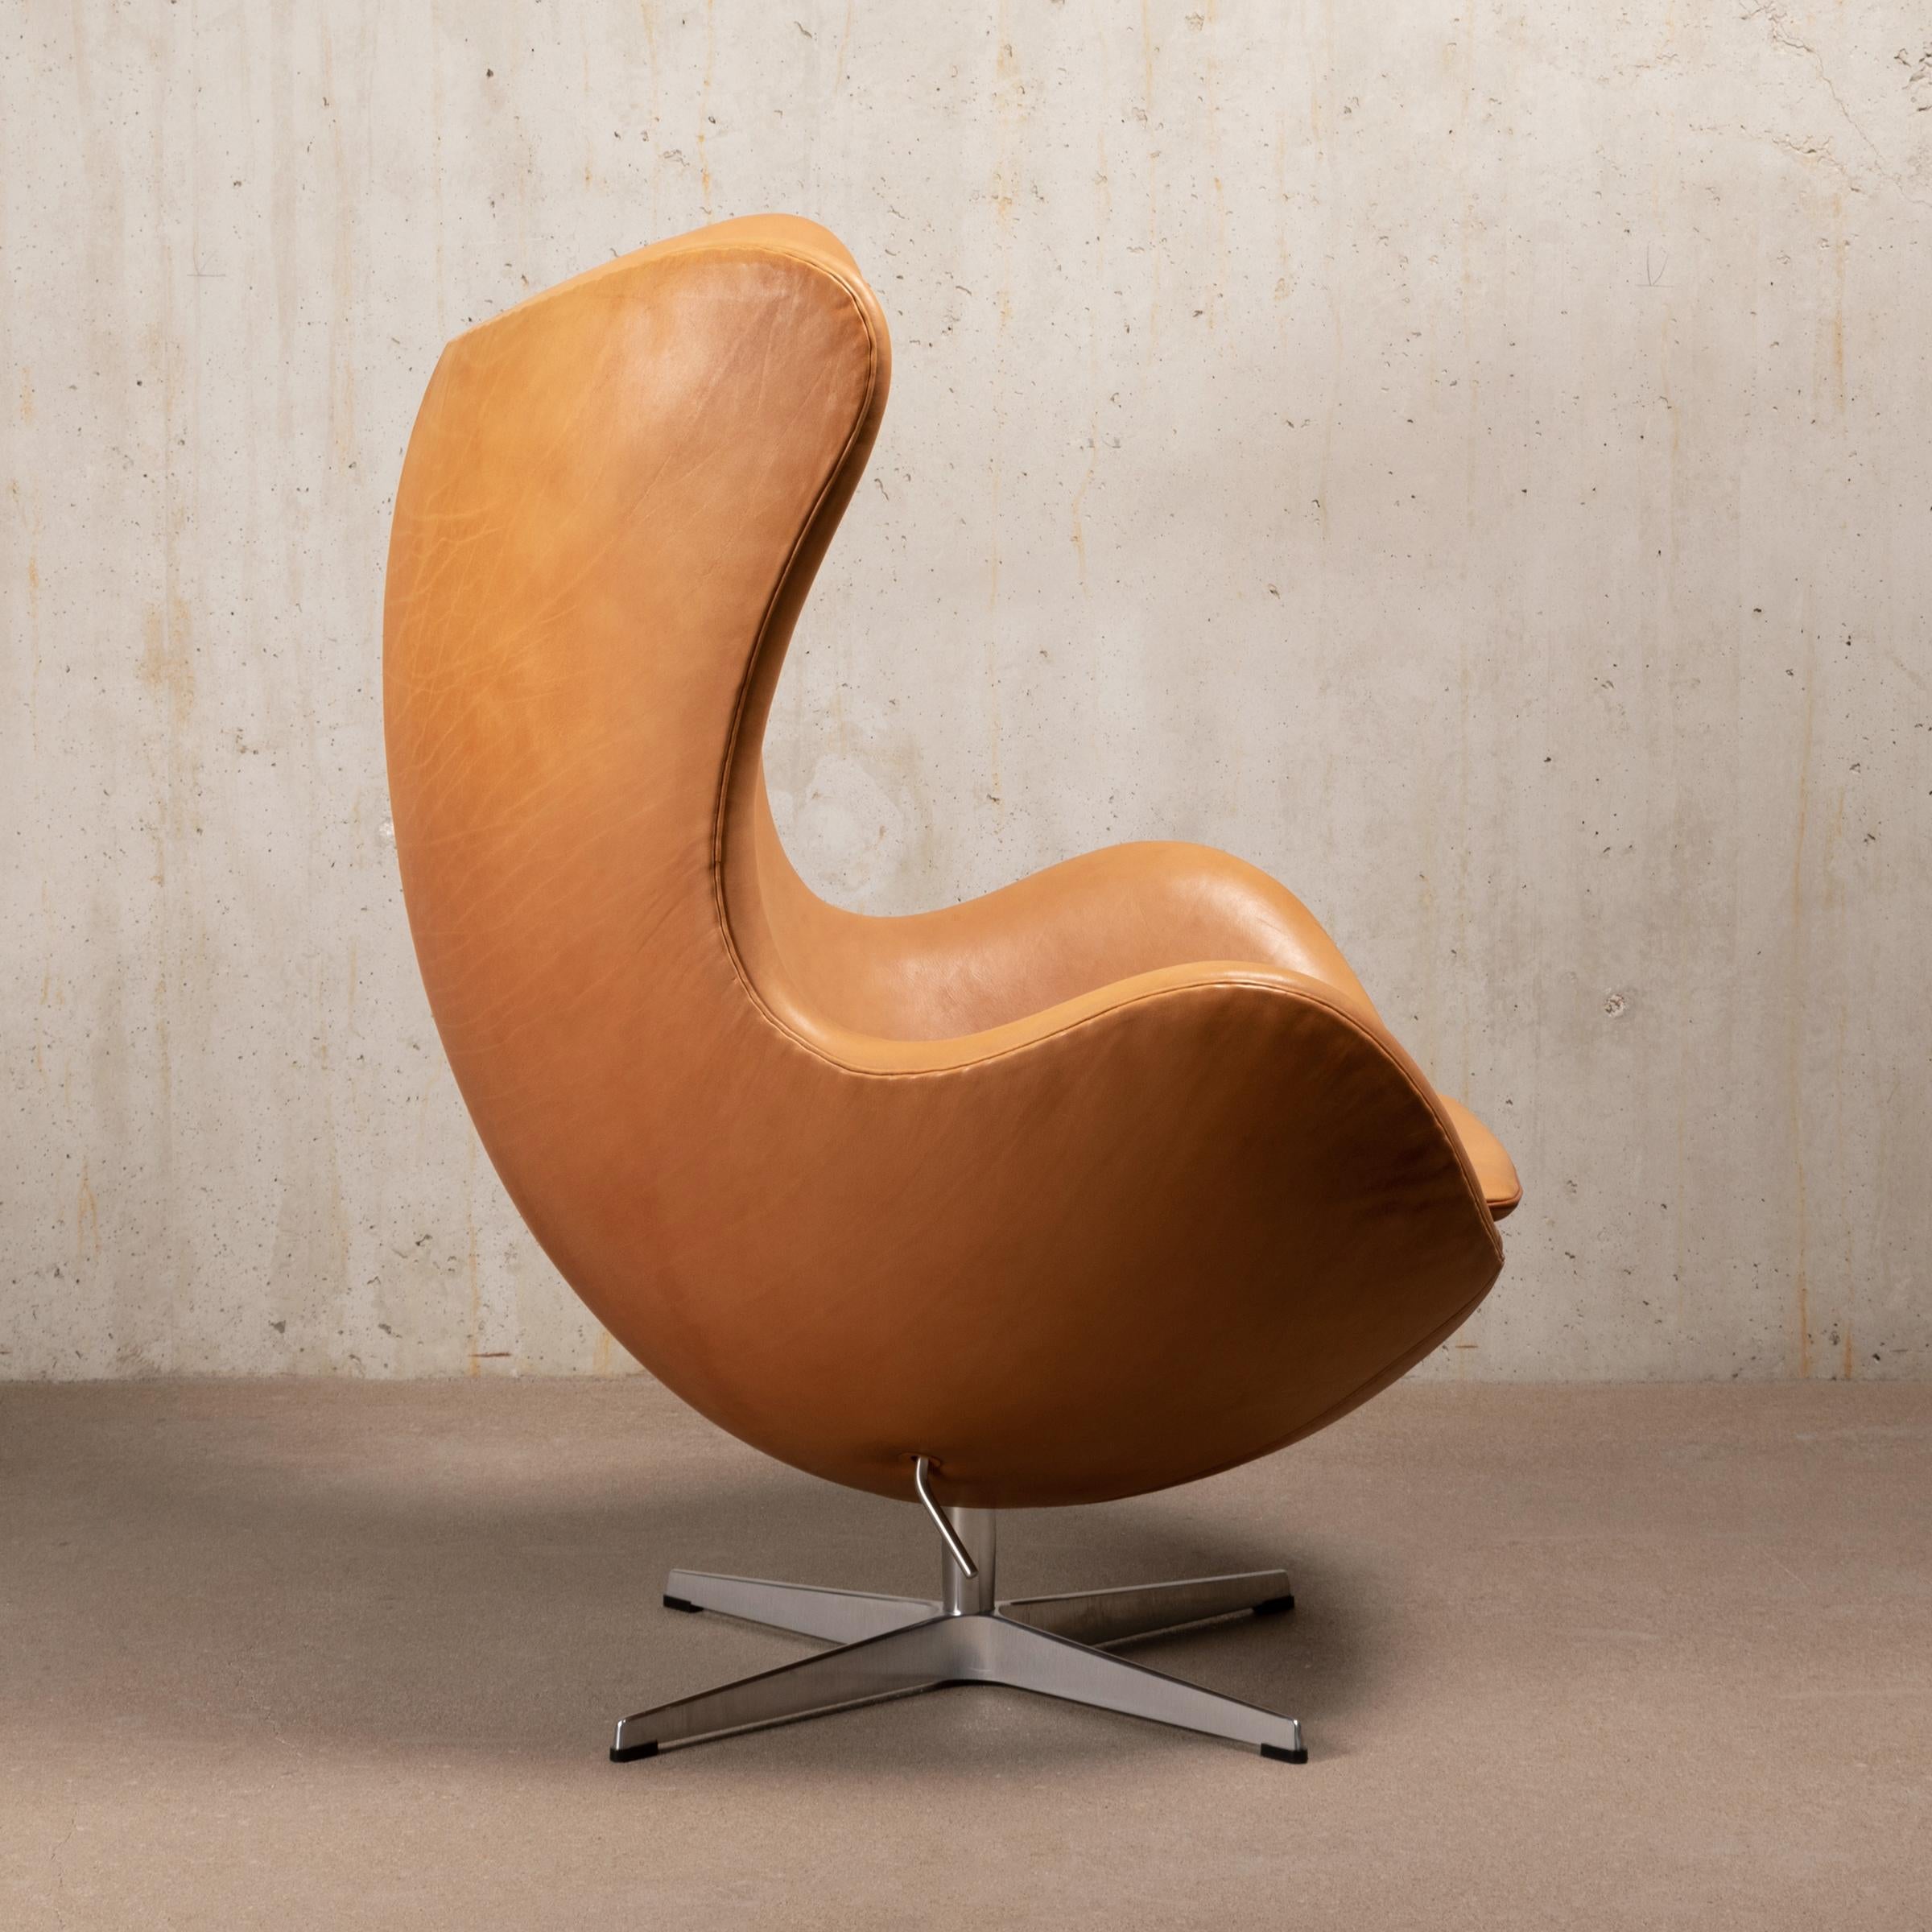 Cast Arne Jacobsen Egg Chair in Patined Walnut Grace Leather by Fitz Hansen, Denmark